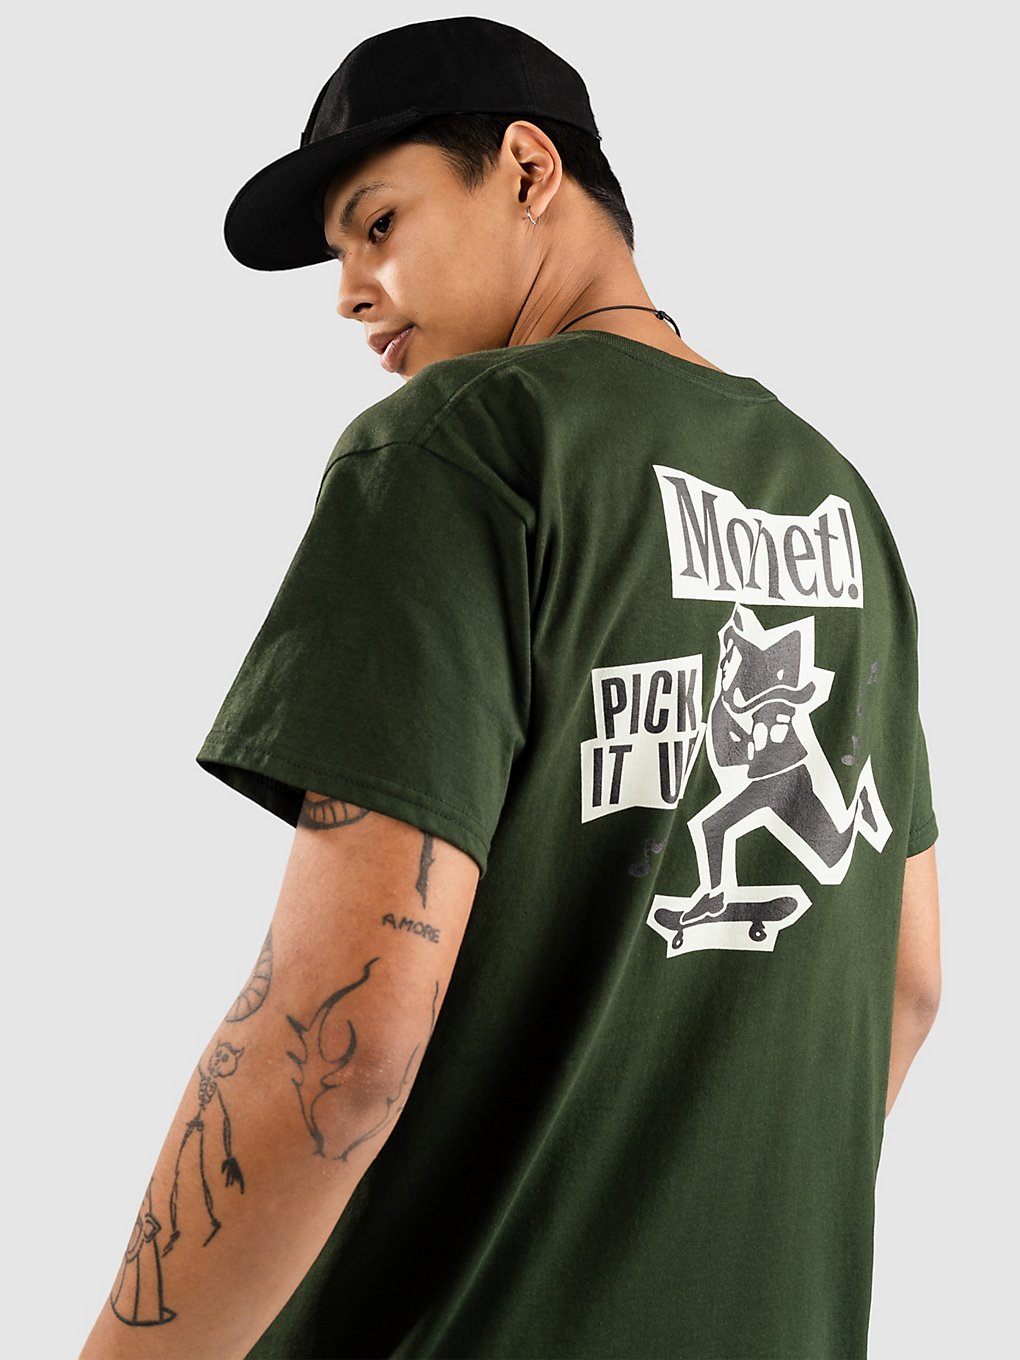 Monet Skateboards Ska Skate T-Shirt dark green kaufen